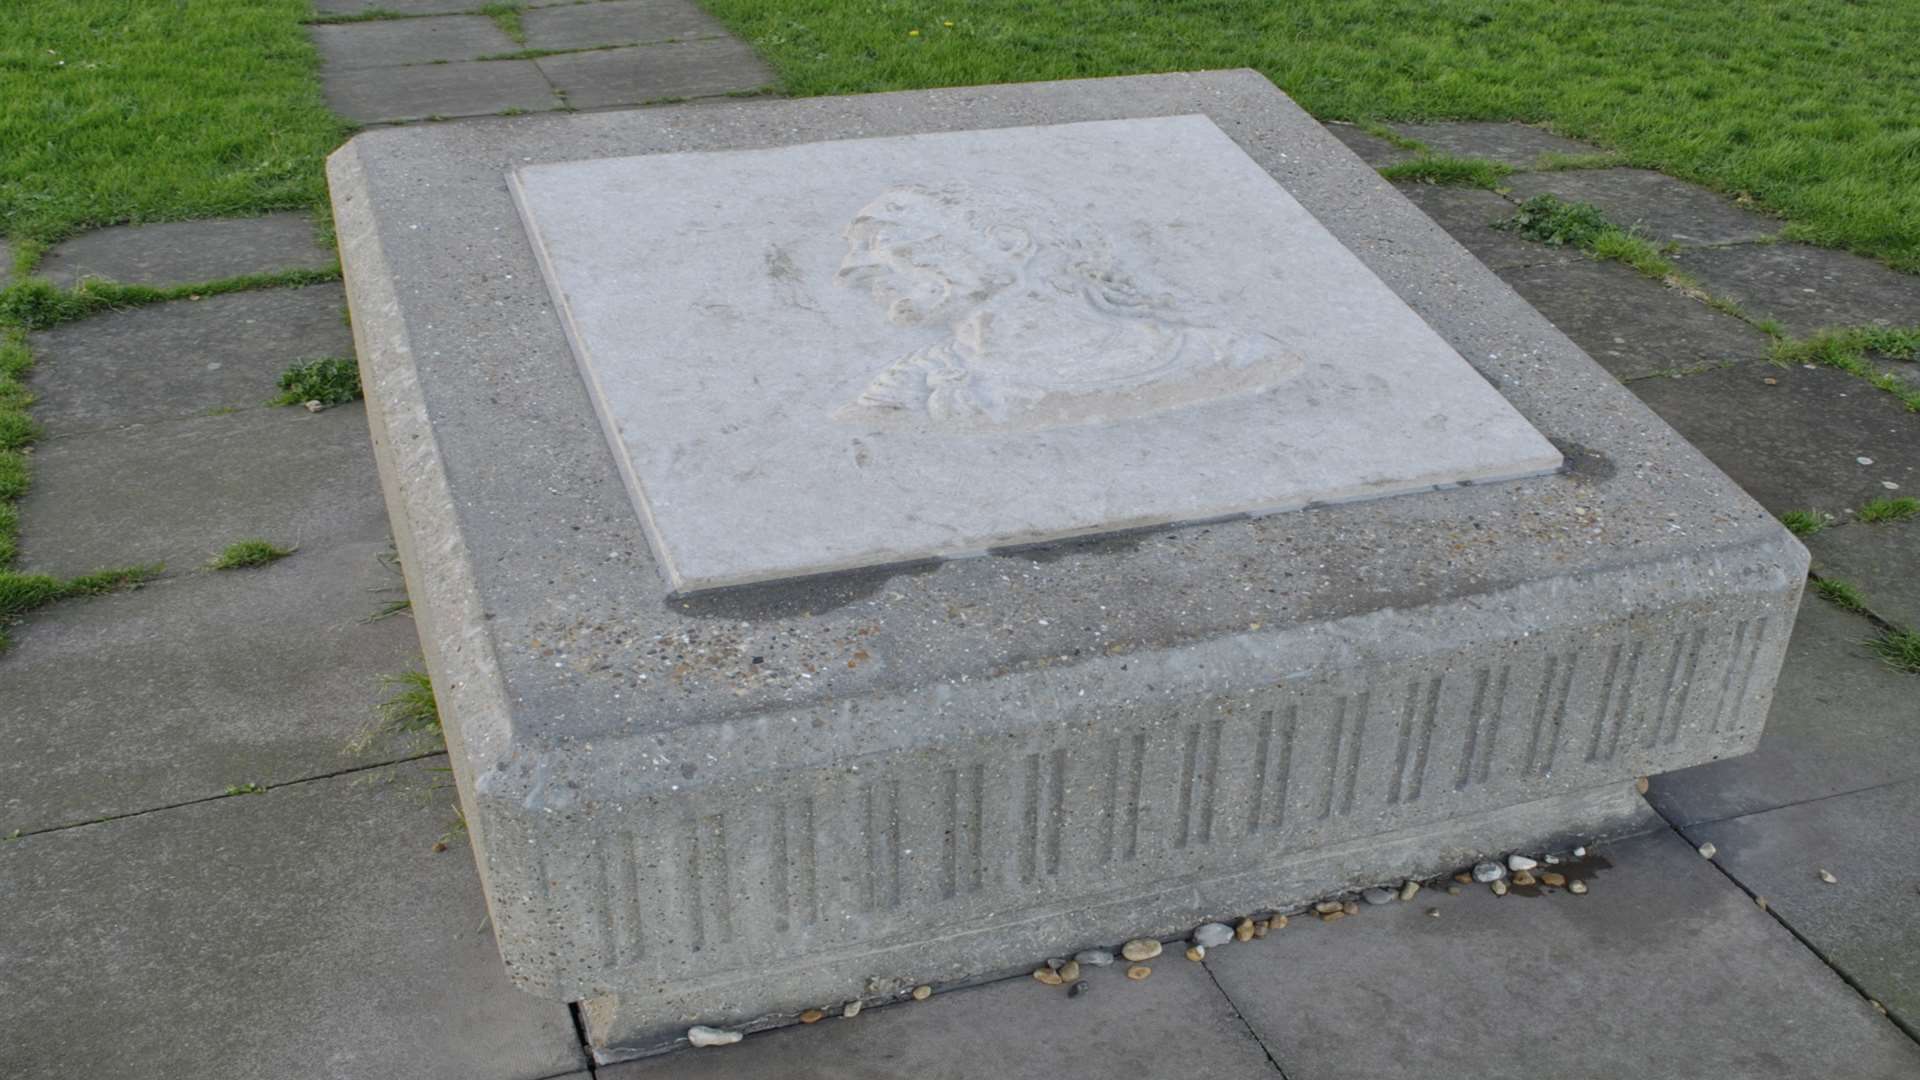 Julius Caesar memorial unveiled at The Beach, Walmer, in 1989